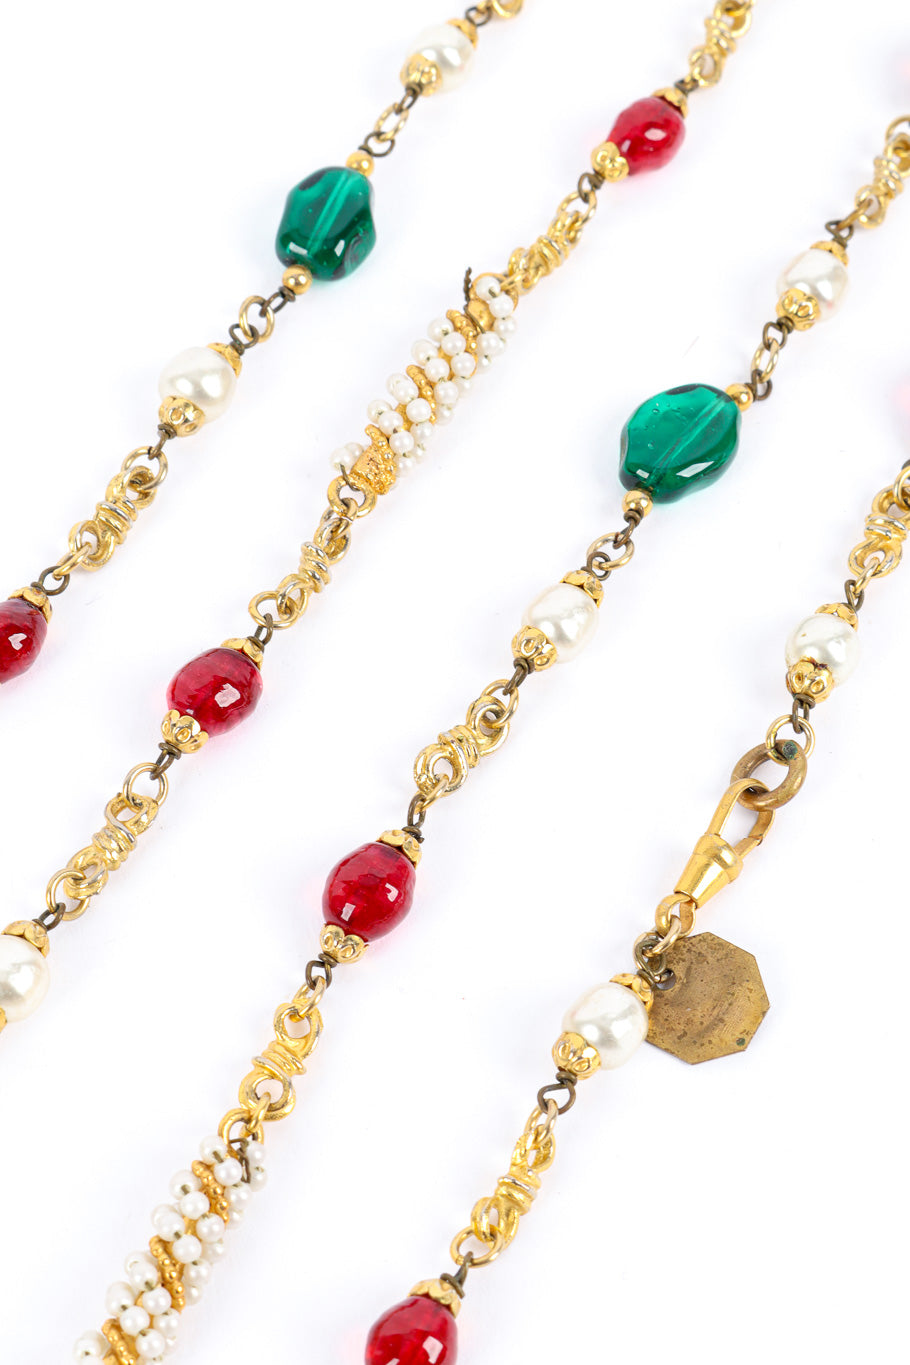 Vintage Sautoir necklace by Chanel 4 strands close @recessla